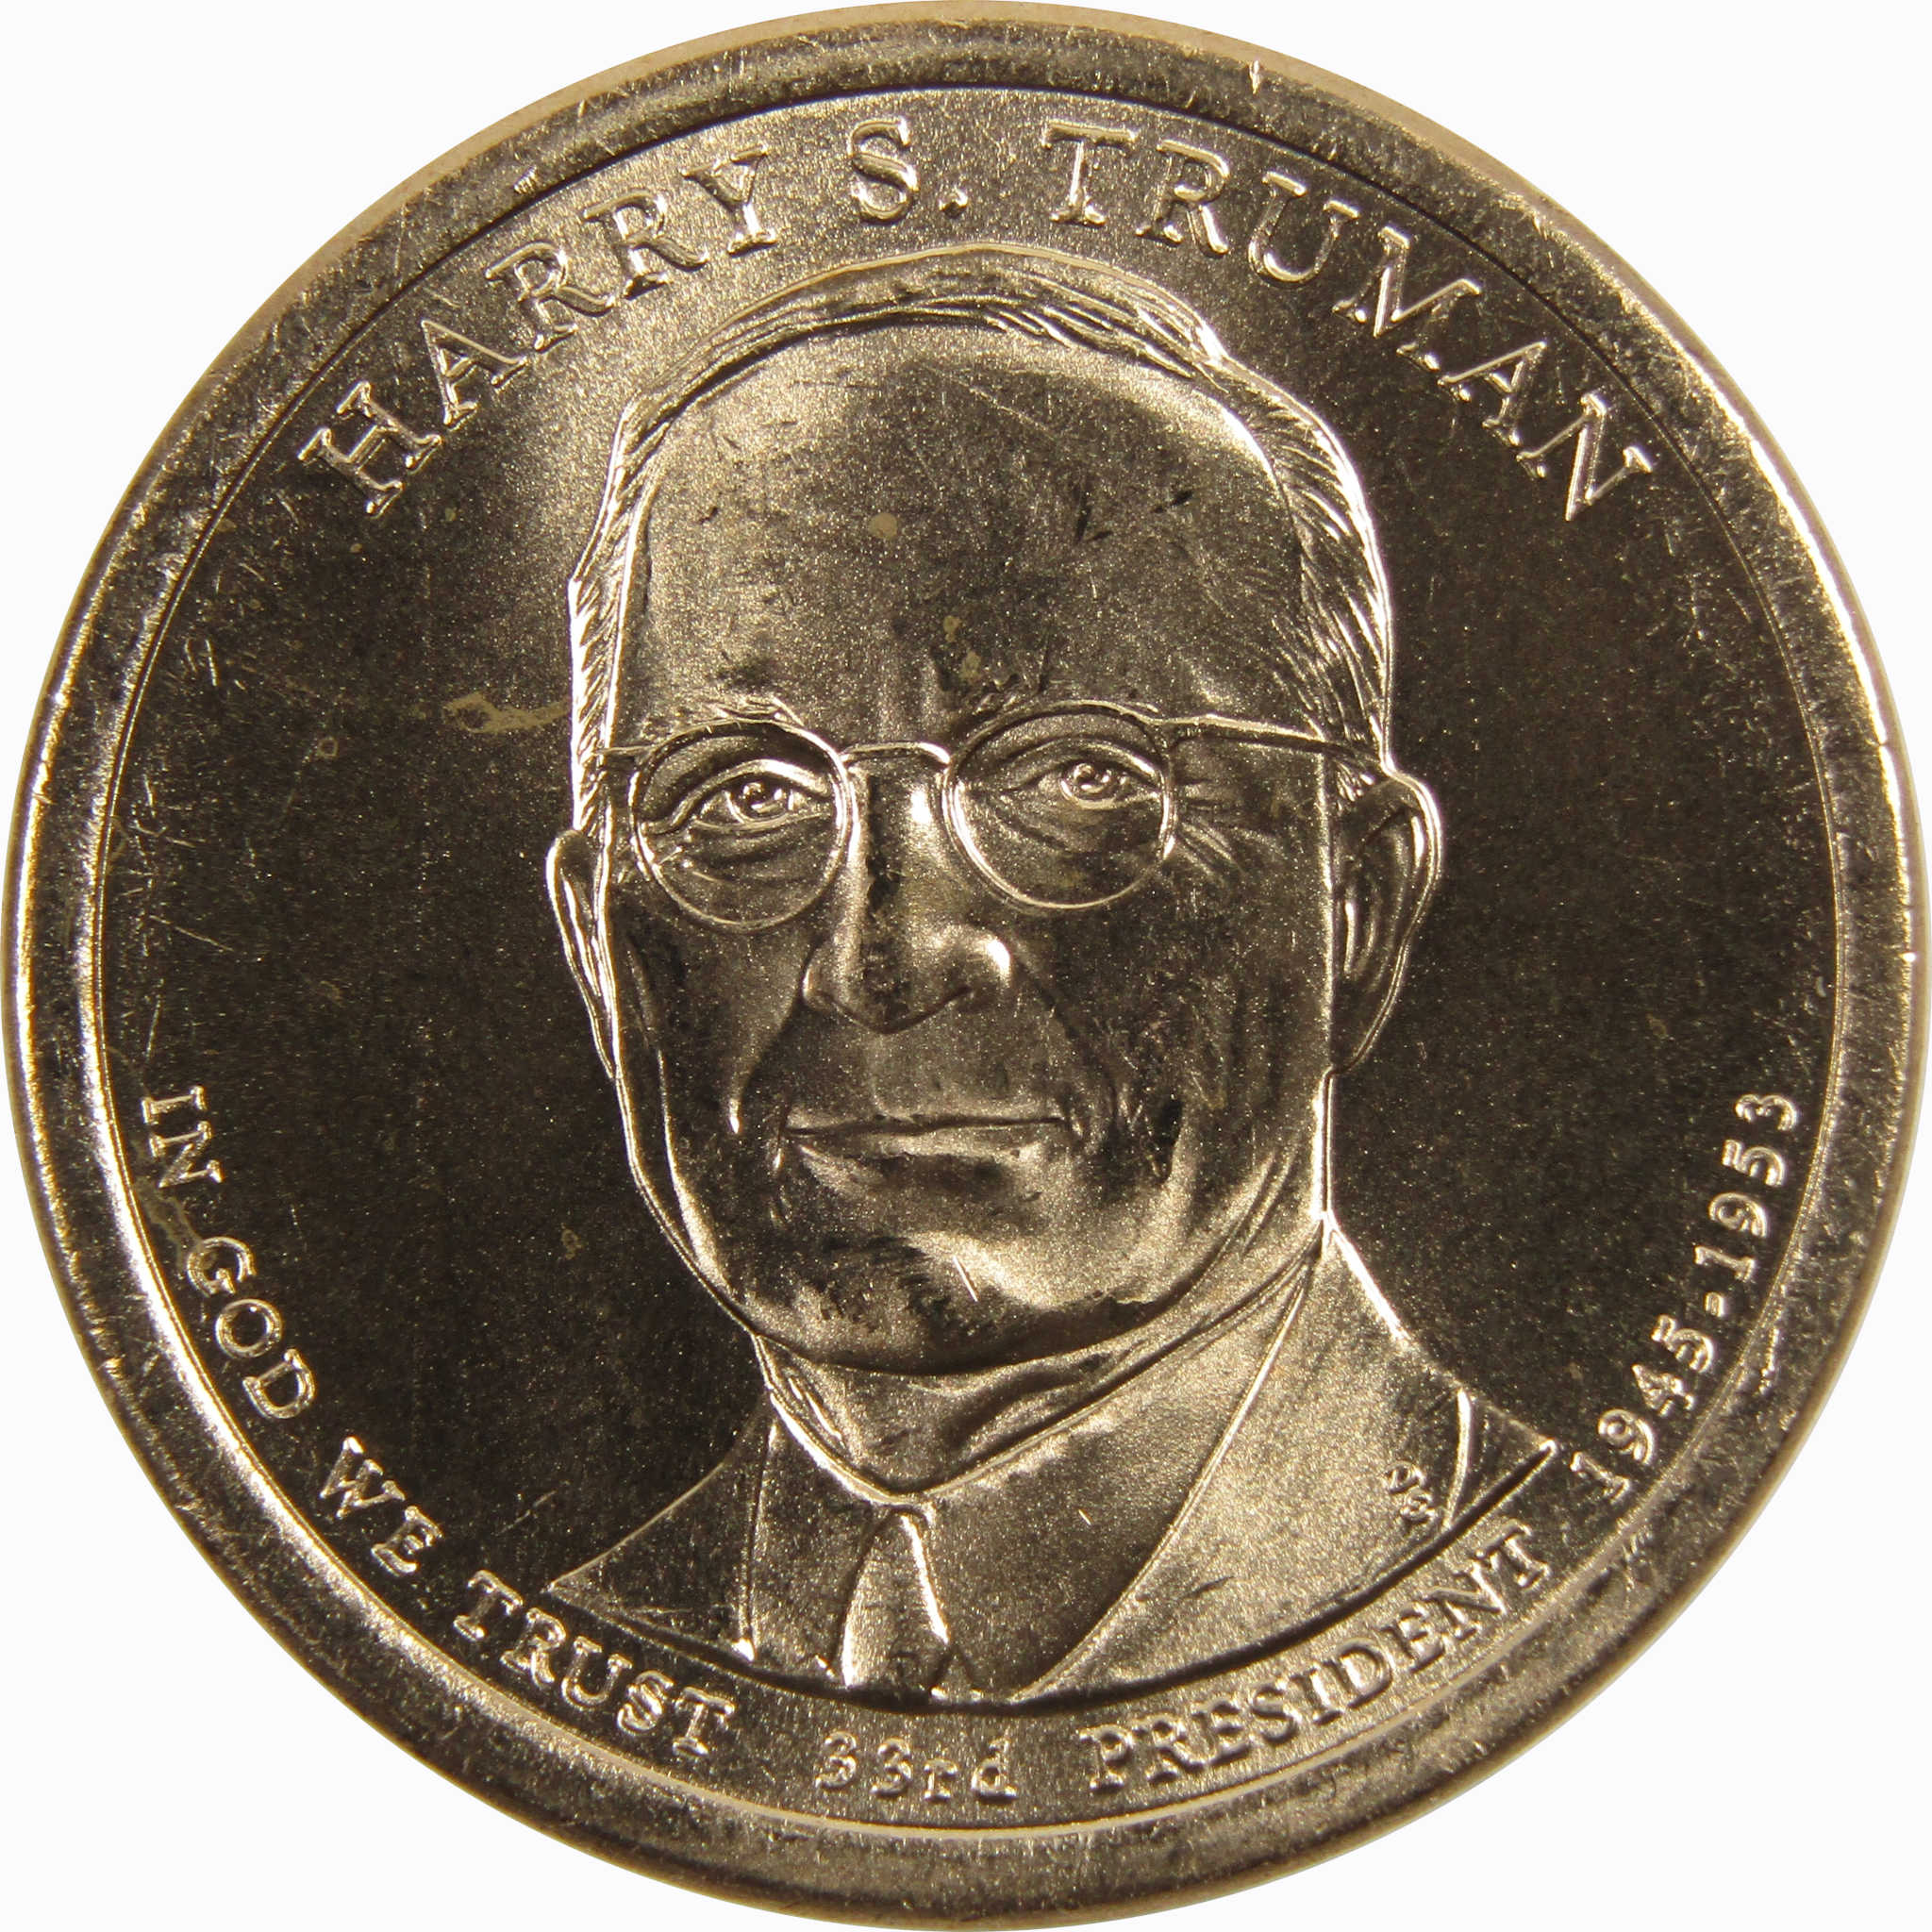 2015 D Harry S Truman Presidential Dollar BU Uncirculated $1 Coin